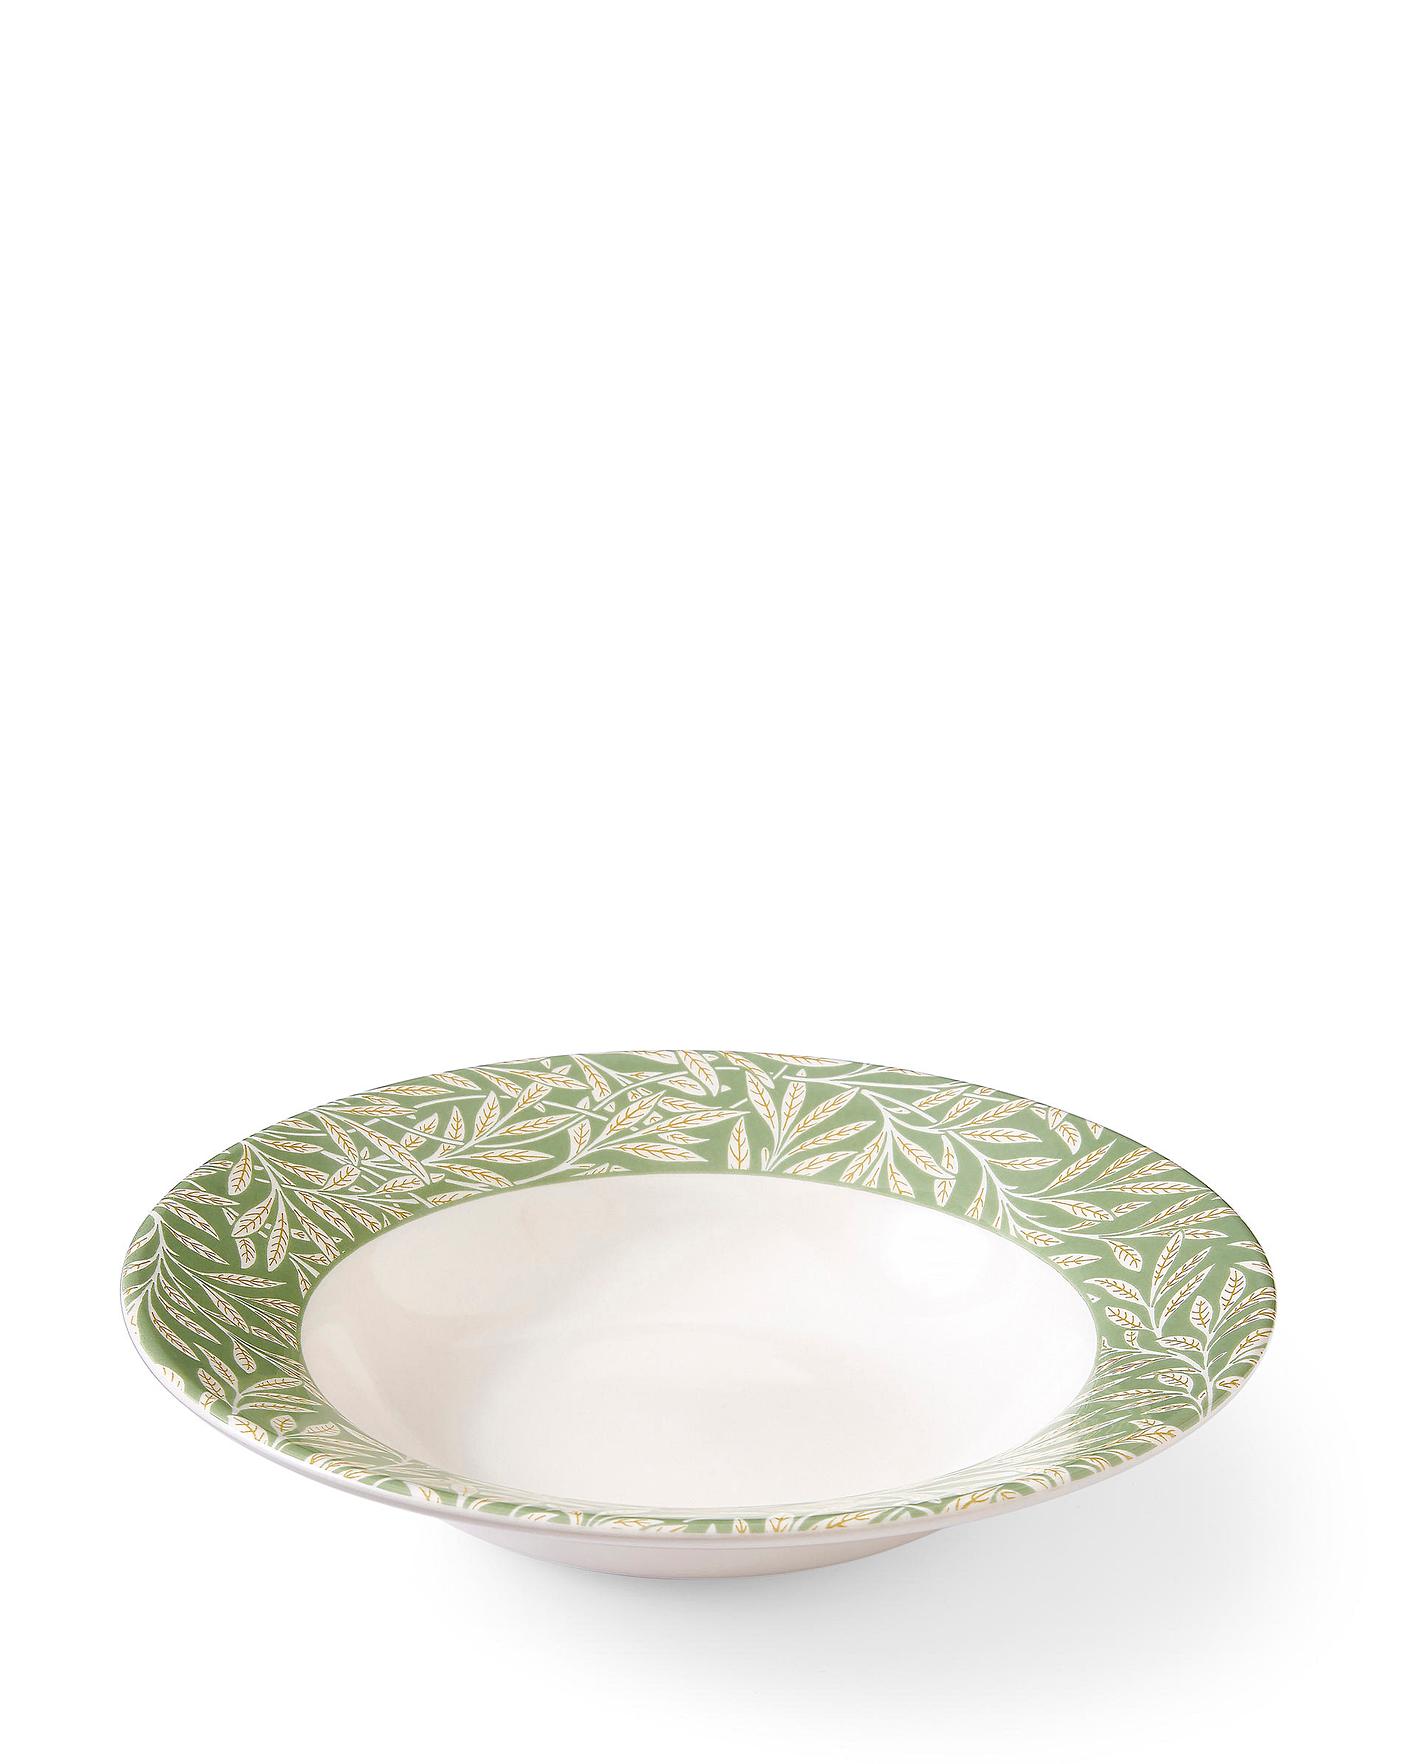 Bowls - Ceramic Pasta Bowls, Salad Bowls & Serving Bowl Sets, Spode